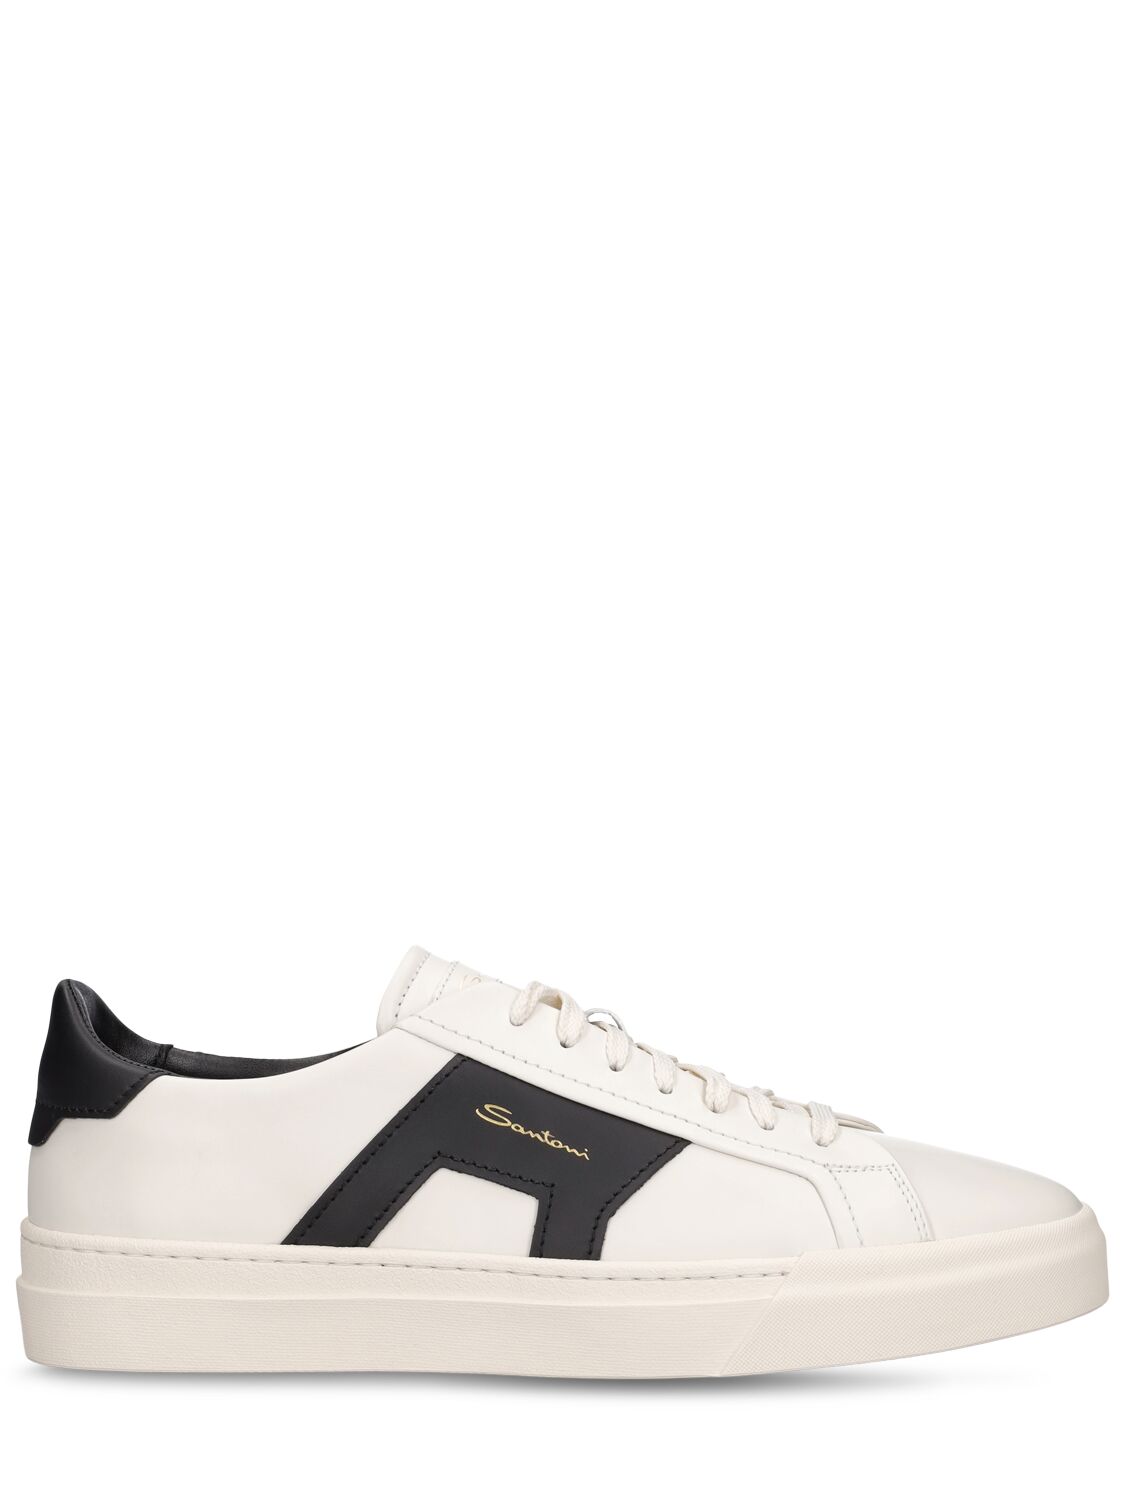 Santoni Leather Low Top Sneakers In White,black